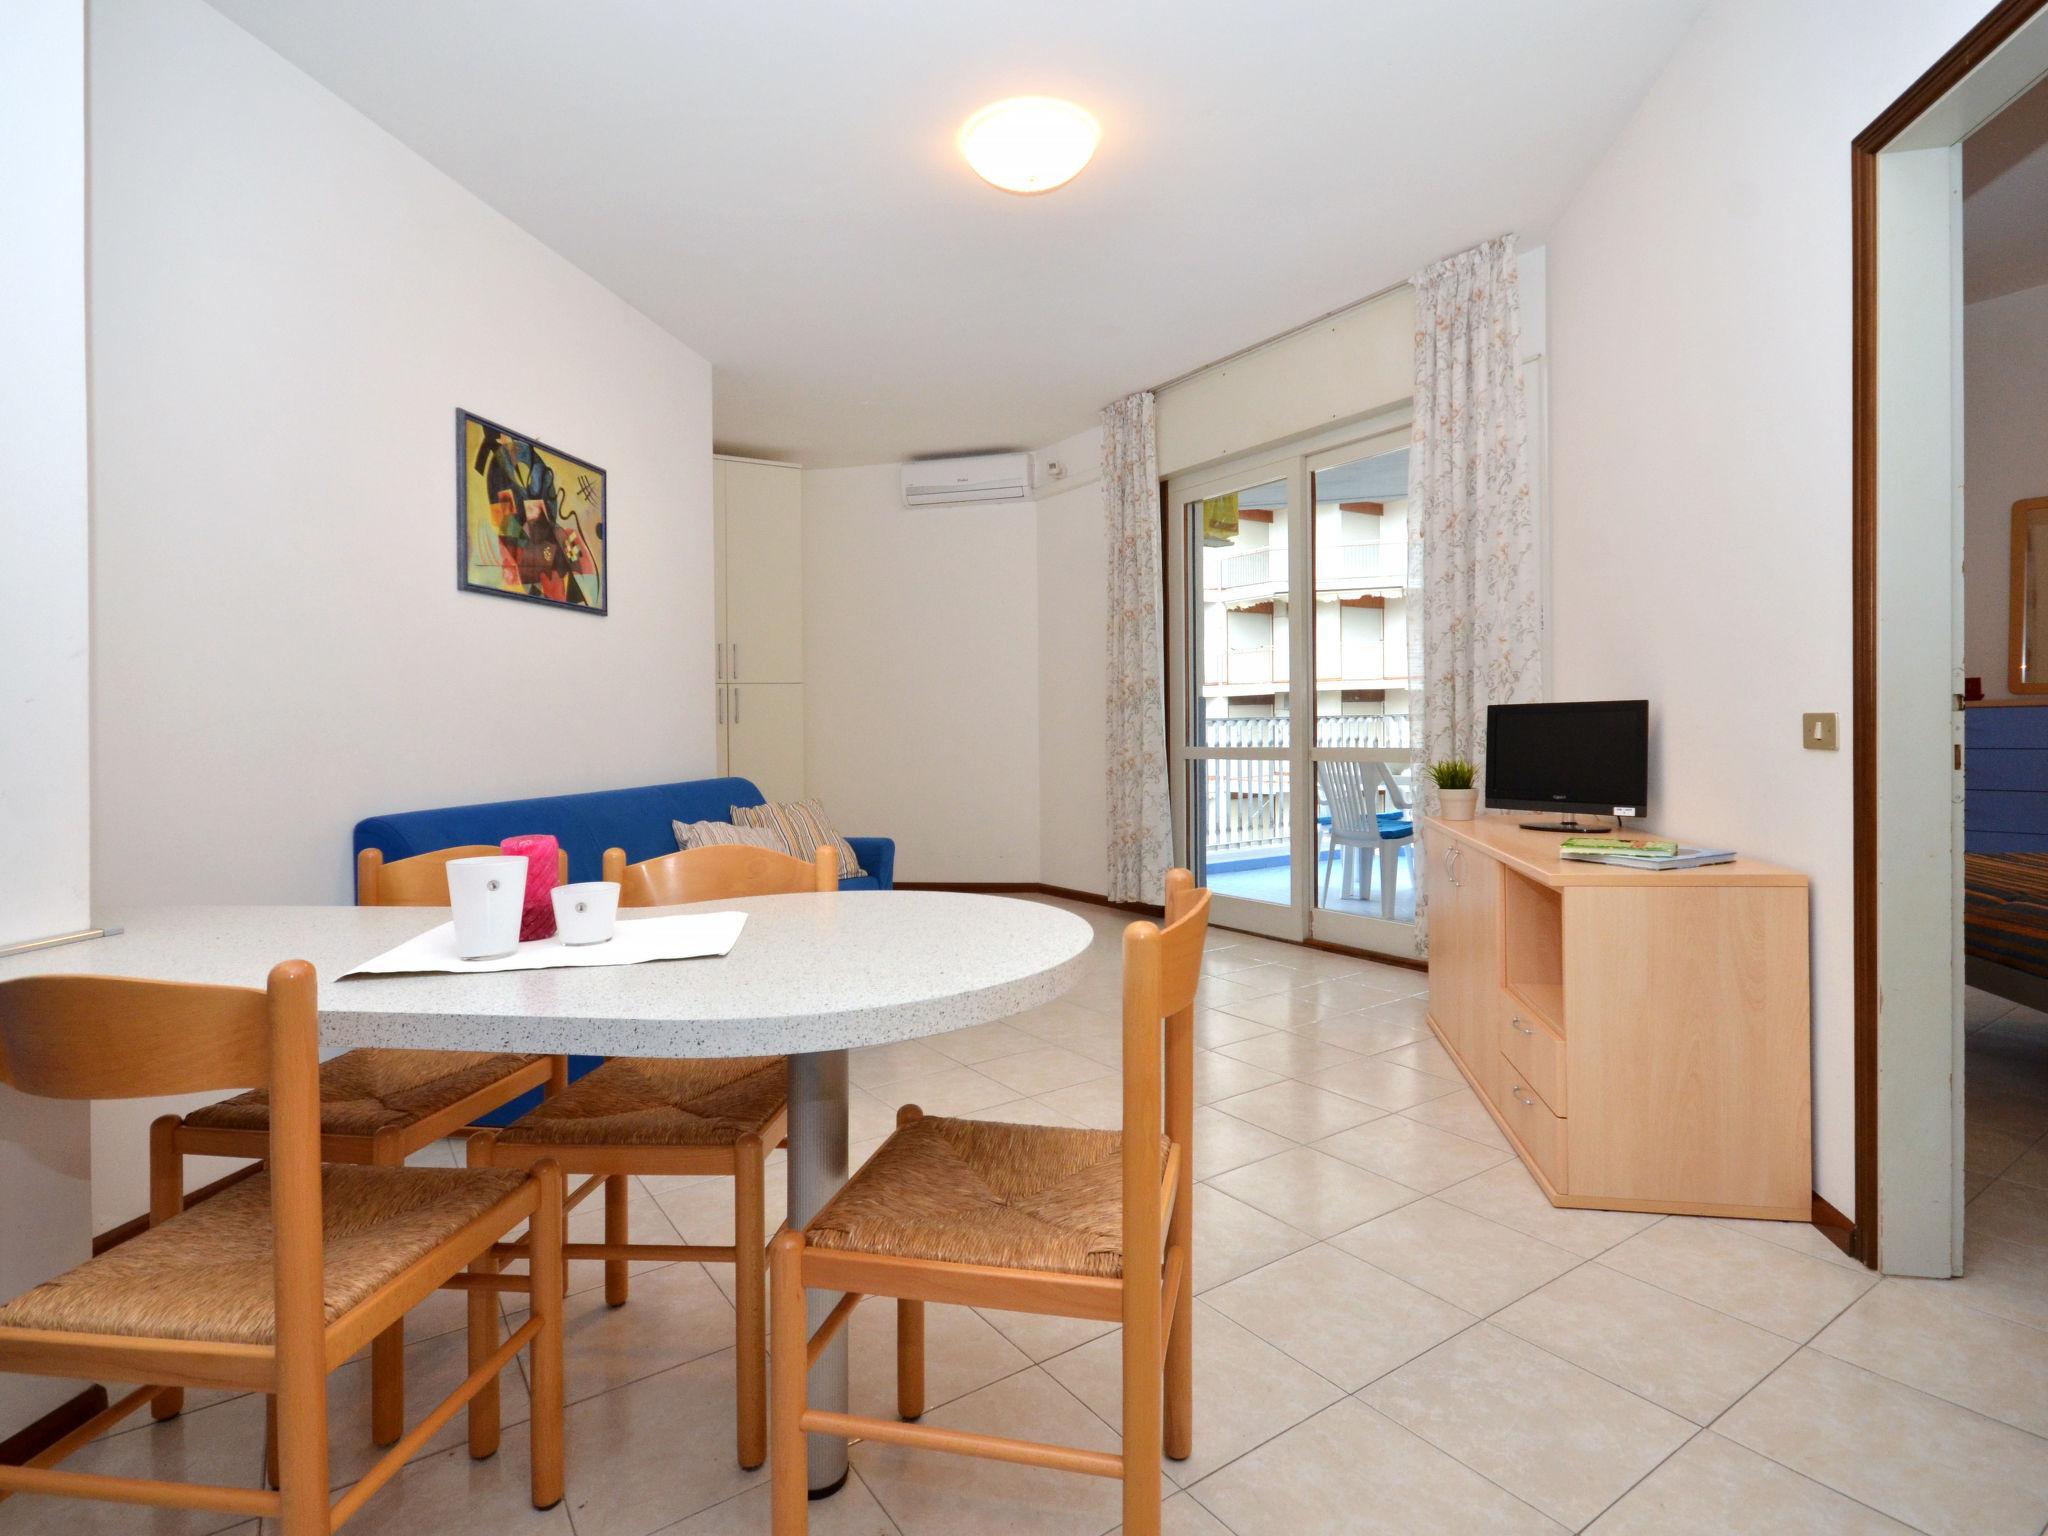 Photo 7 - Appartement de 2 chambres à Lignano Sabbiadoro avec piscine et vues à la mer